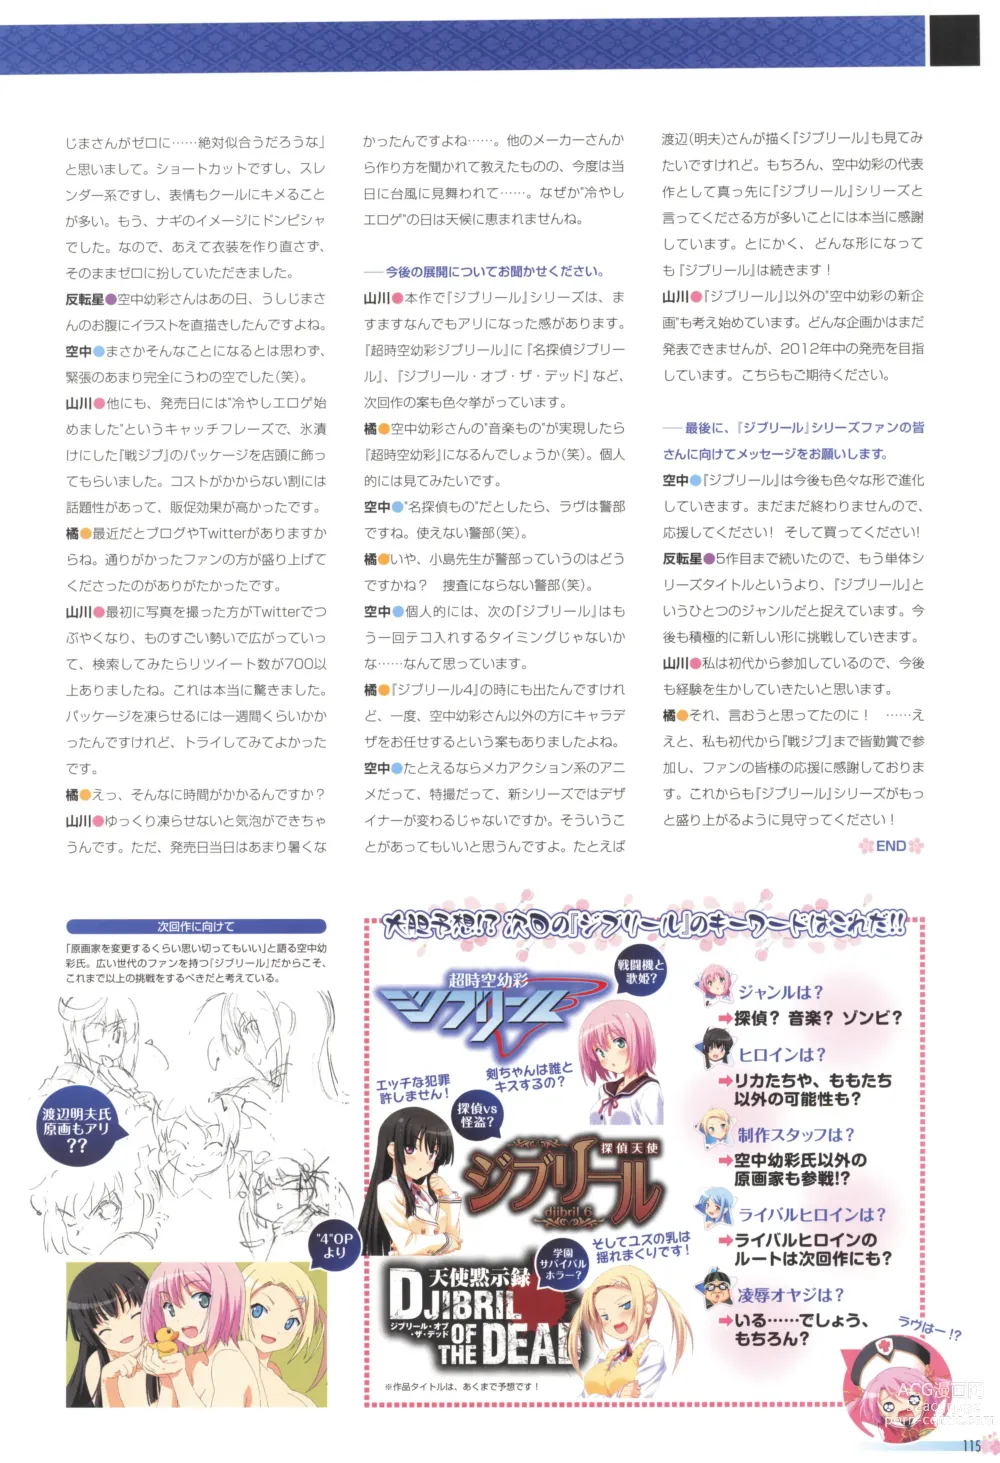 Page 119 of manga Sengoku Tenshi Djibril Official Fanbook